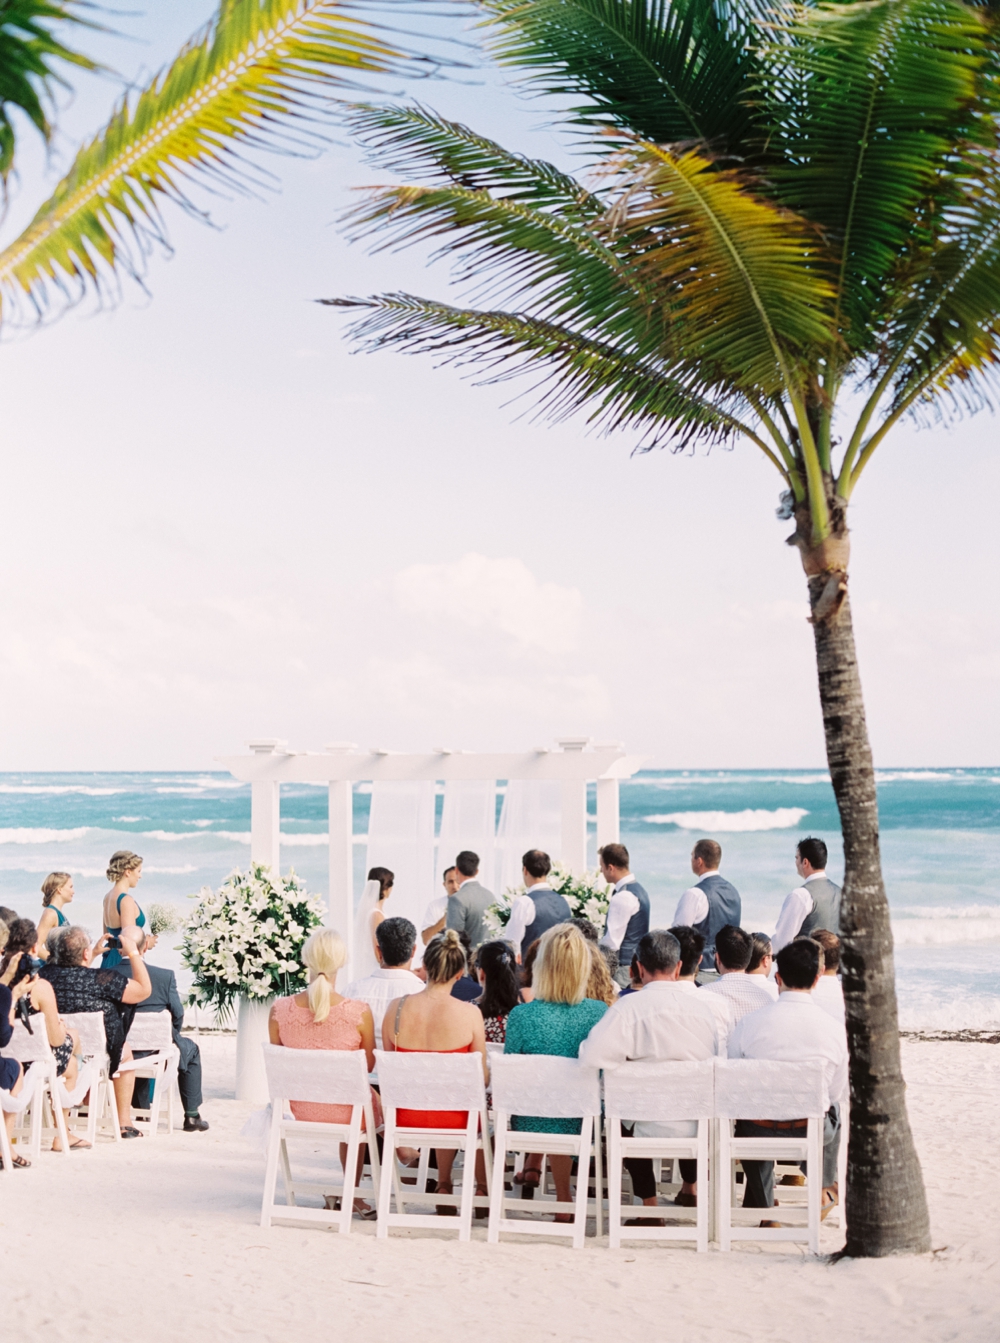 Destination wedding photographer | beach wedding | Calgary wedding photographers | Mexico wedding photography